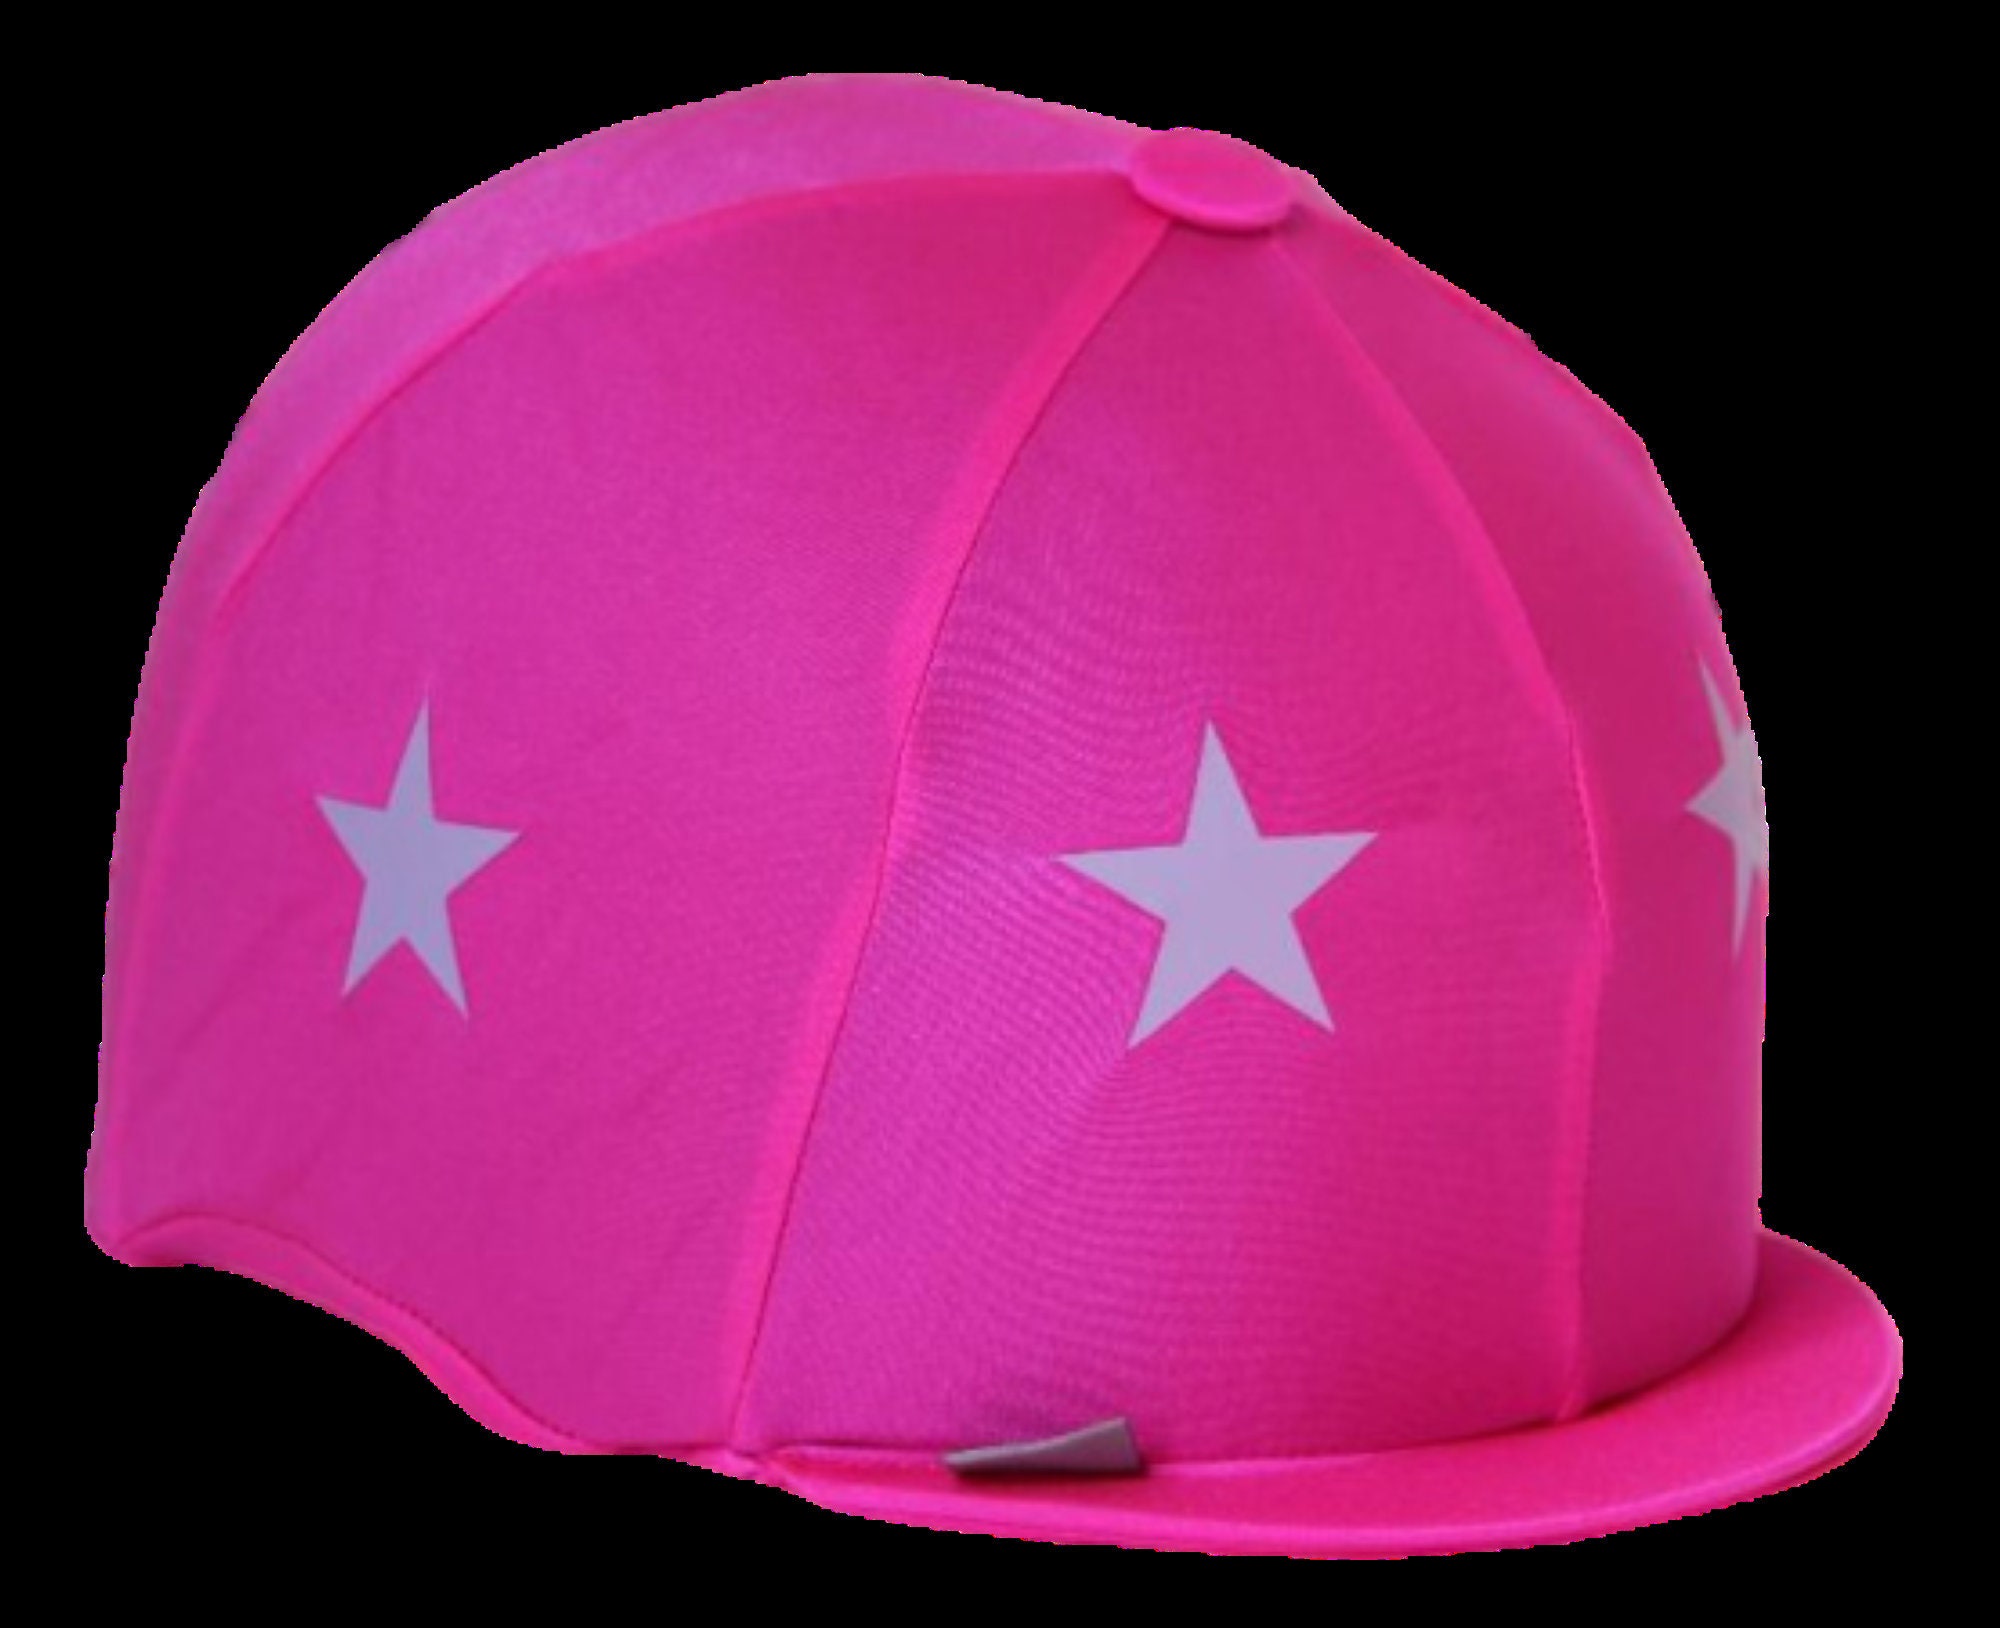 Shires Equi-Flector Skull Hat Cover in Bright pink hi viz fluorescent riding 